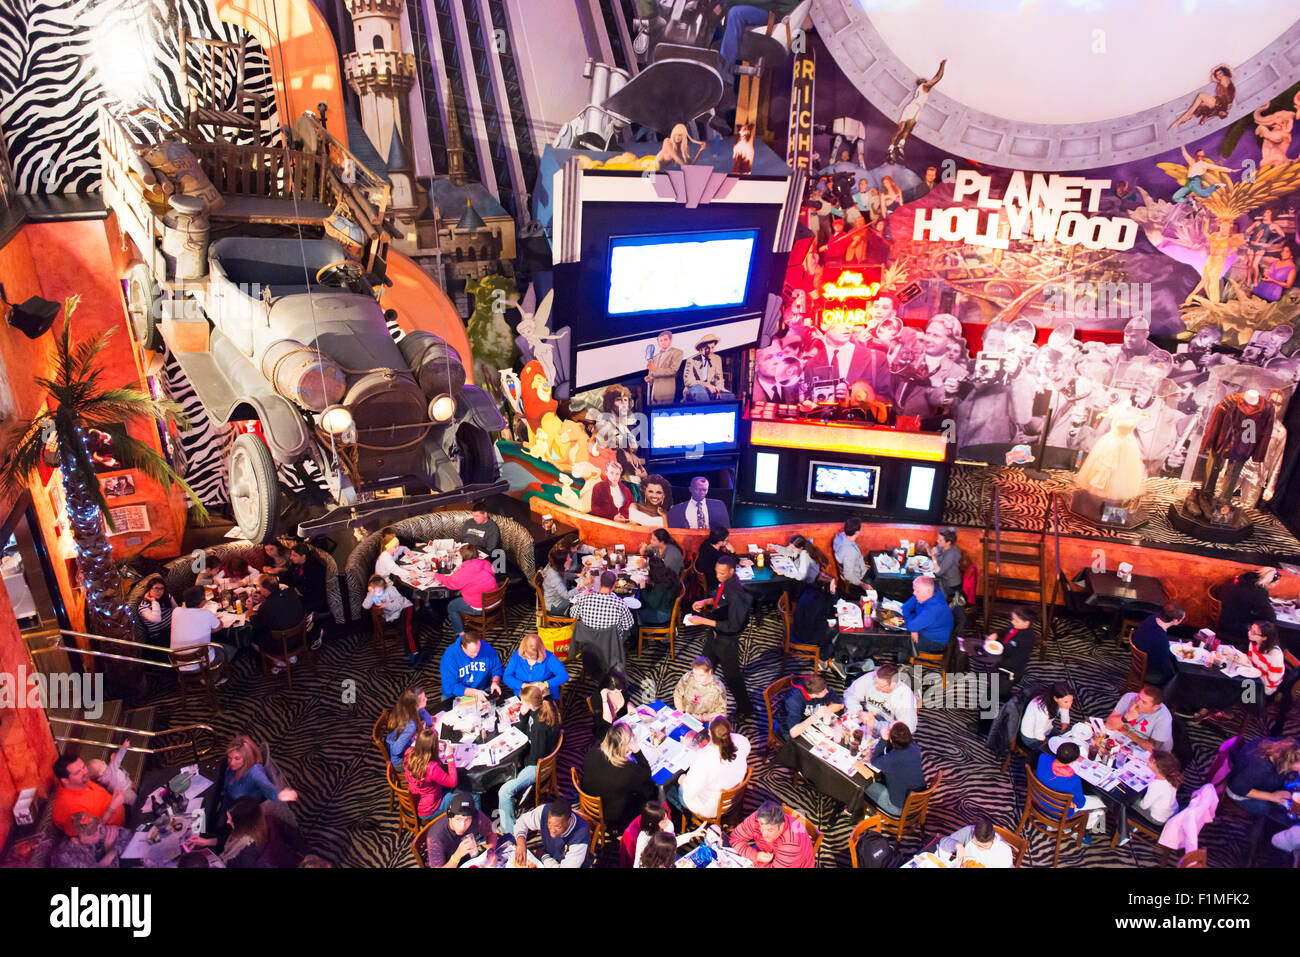 Interior of the Planet Hollywood Restaurant at Disney Springs, Disney World, Florida. Stock Photo